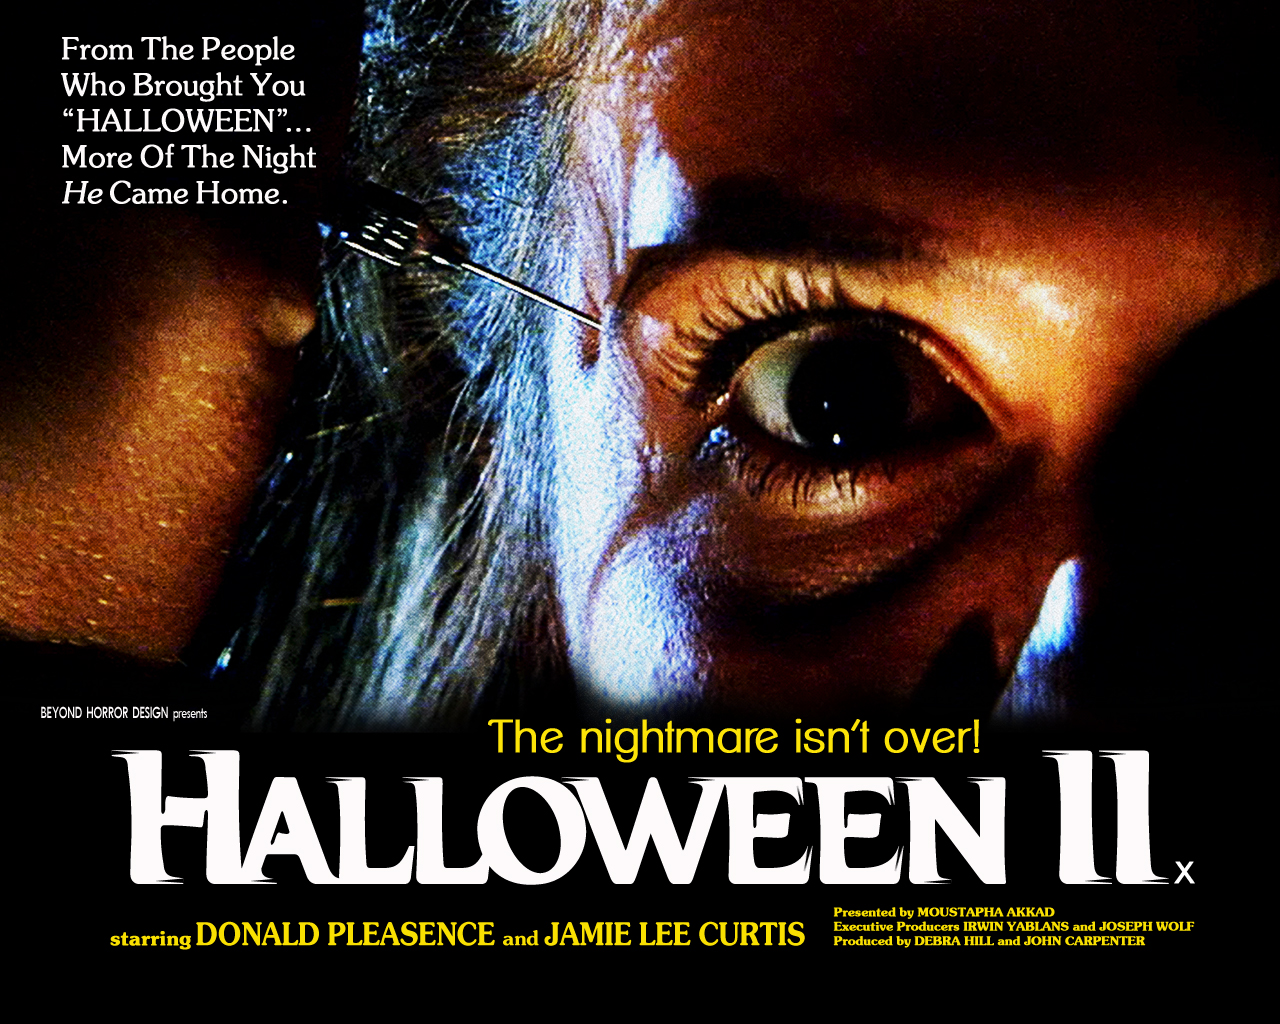 https://blogger.googleusercontent.com/img/b/R29vZ2xl/AVvXsEhkVXf0VOmnCdZ6-sjwv_wZb1PC-qiMSJpBD89yBvXe0z46bzvnfZQBxGWMktknhVApNd6Kd8jjsb4OFIqXOiSjSgwkV6Zc7fQhFsjInb0wRsvXgBR3nDNtFBFChhkfR4pHK4qKYZWkcMvq/s1600/Halloween+II+1981+Poster+Wallpaper+Beyond+Horror+Design.jpg